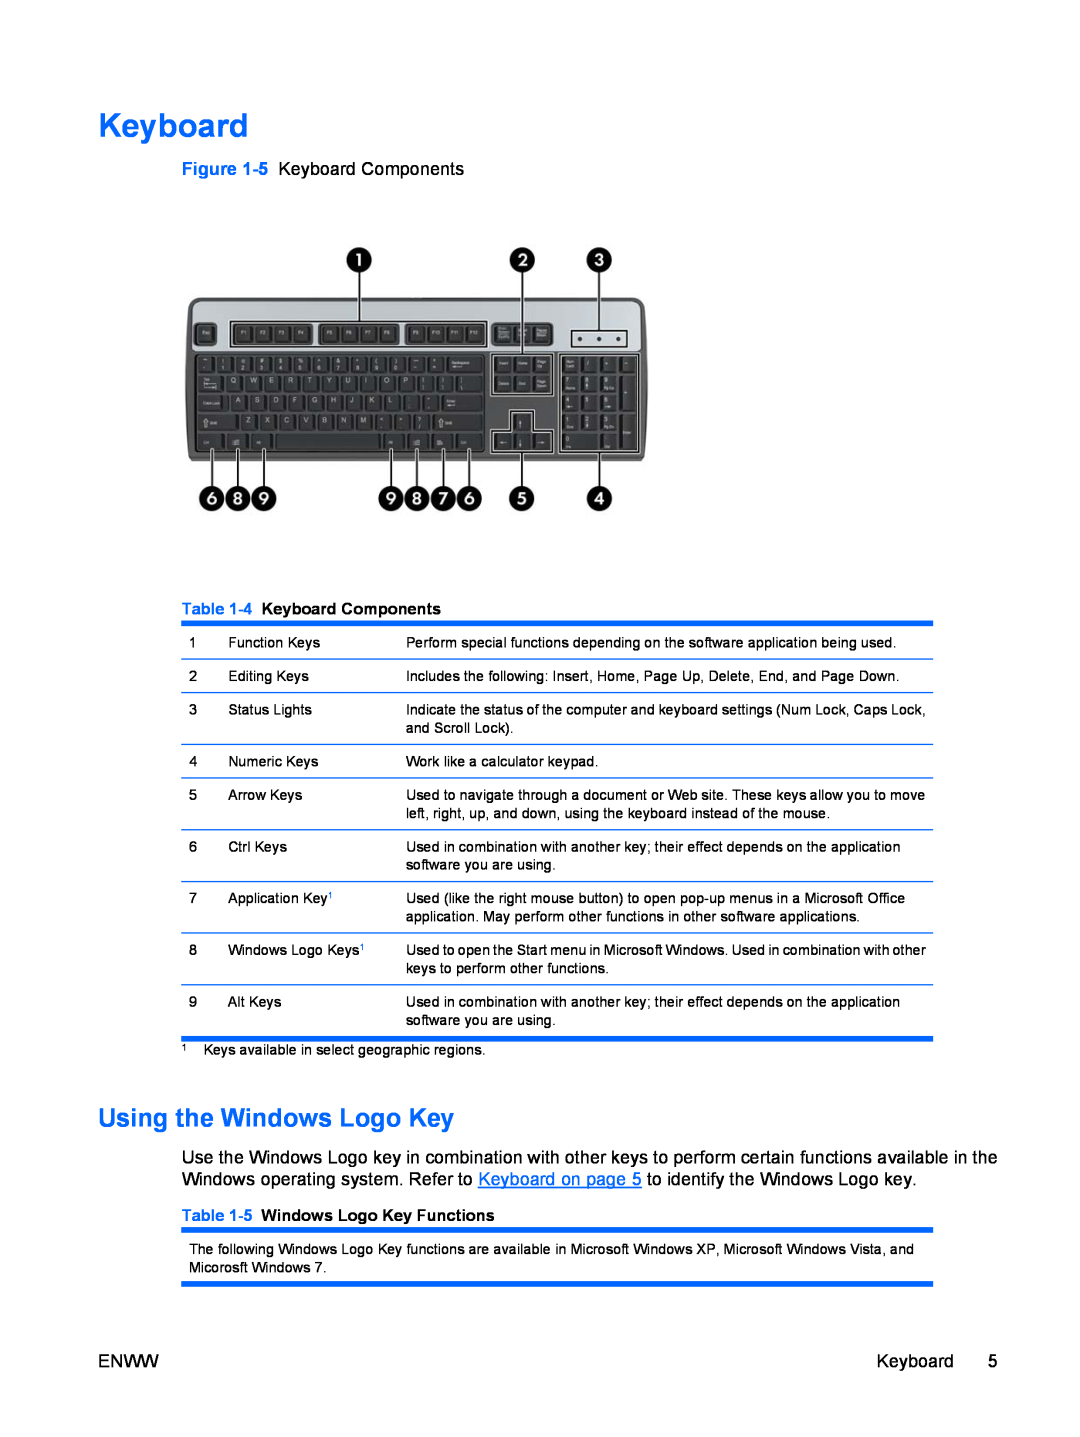 Hitachi 8000 Elite manual Using the Windows Logo Key, 4 Keyboard Components, 5 Windows Logo Key Functions 